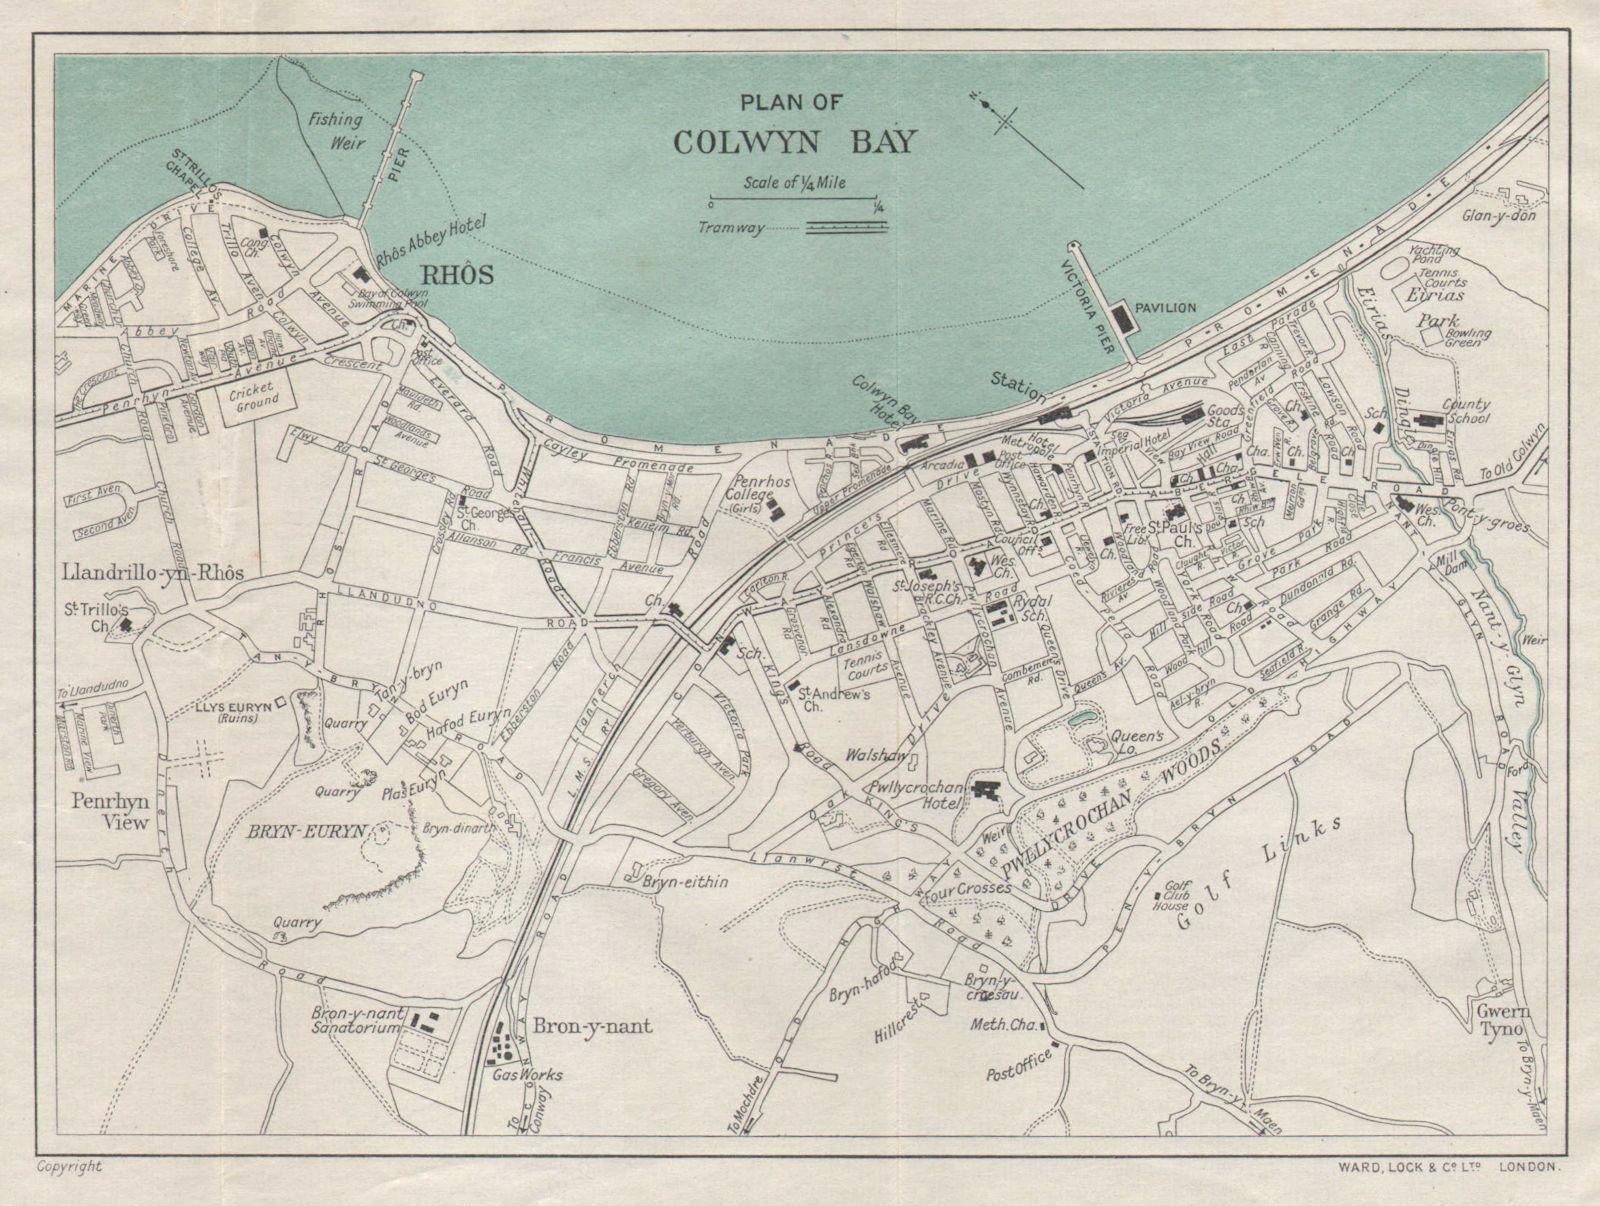 COLWYN BAY vintage tourist town city resort plan. Wales. WARD LOCK 1938 map